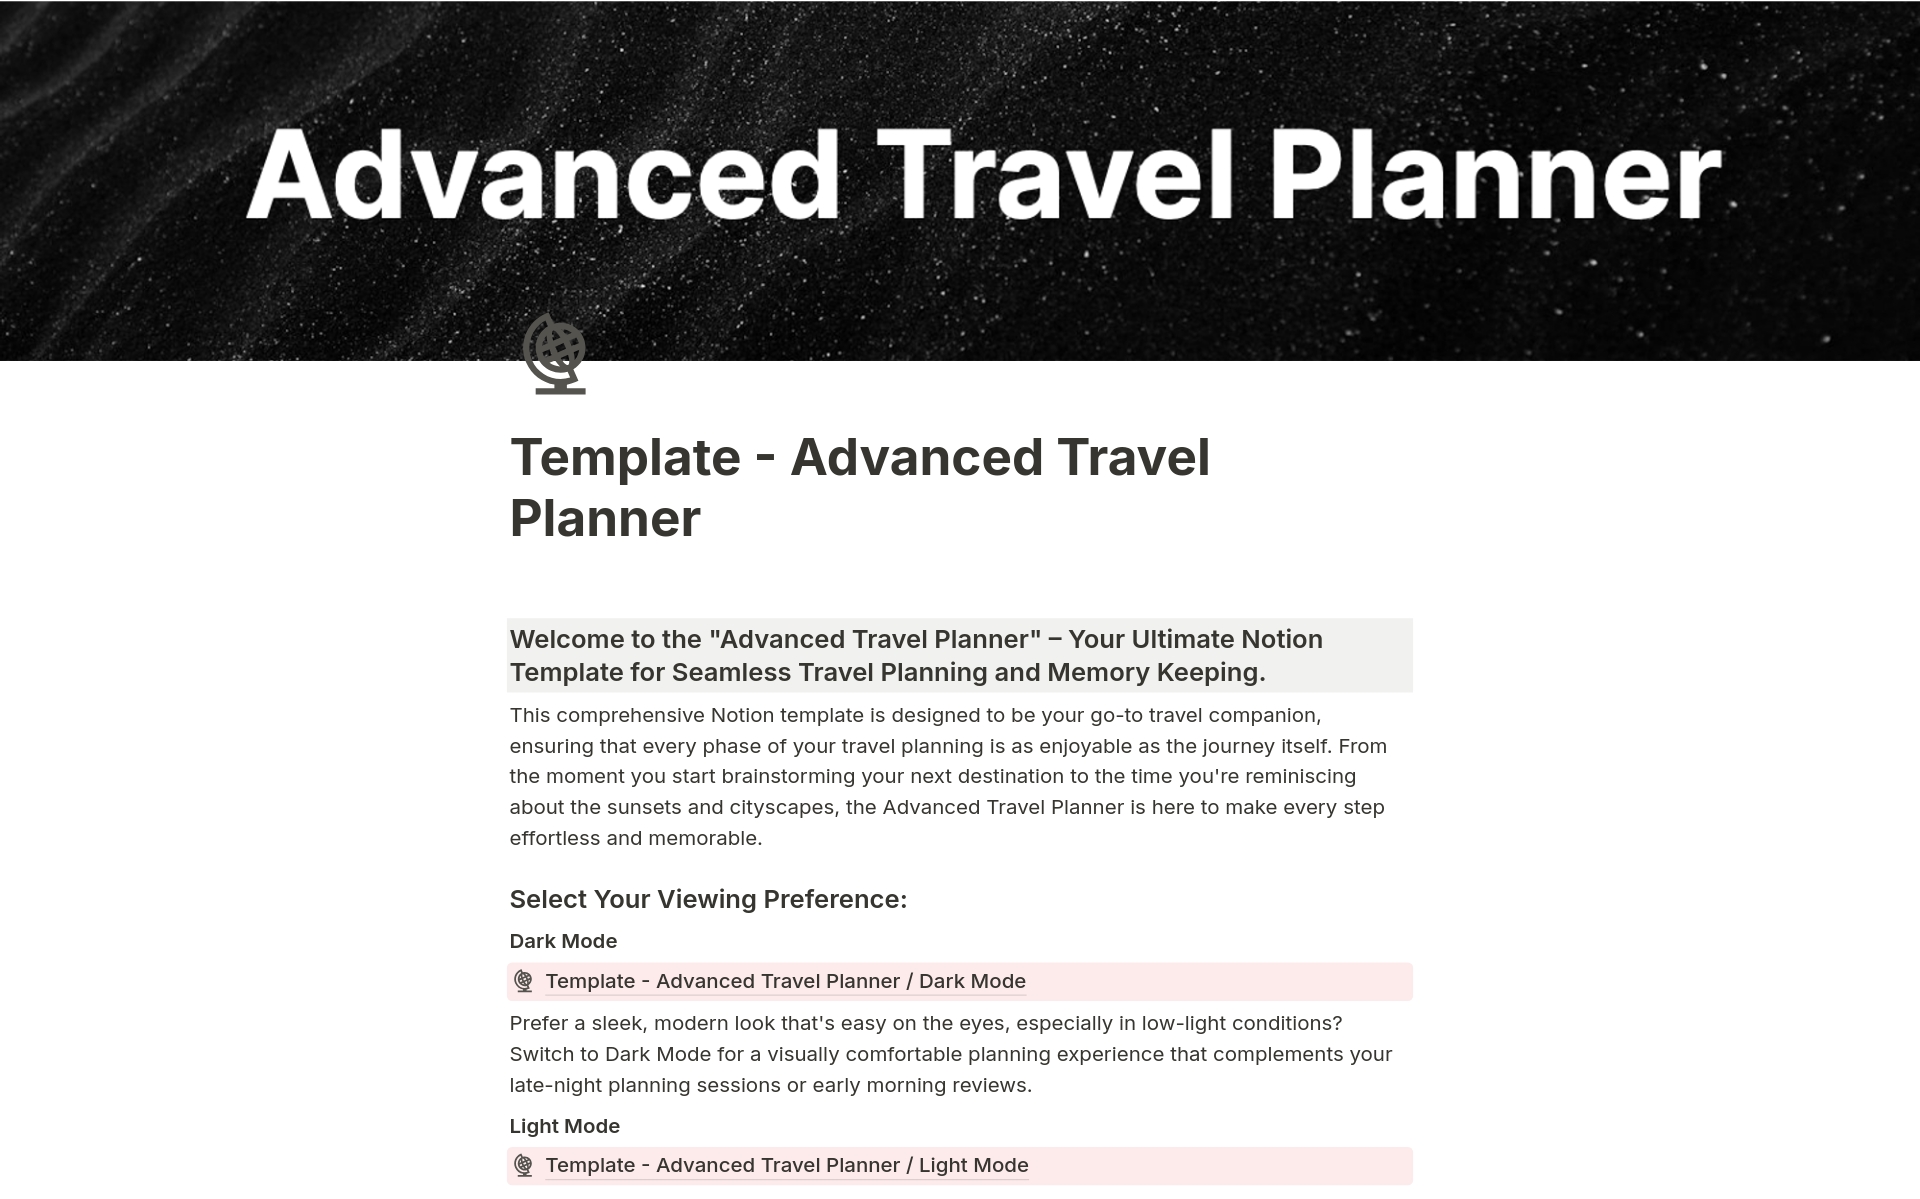 Advanced Travel Planner by Noah님의 템플릿 미리보기